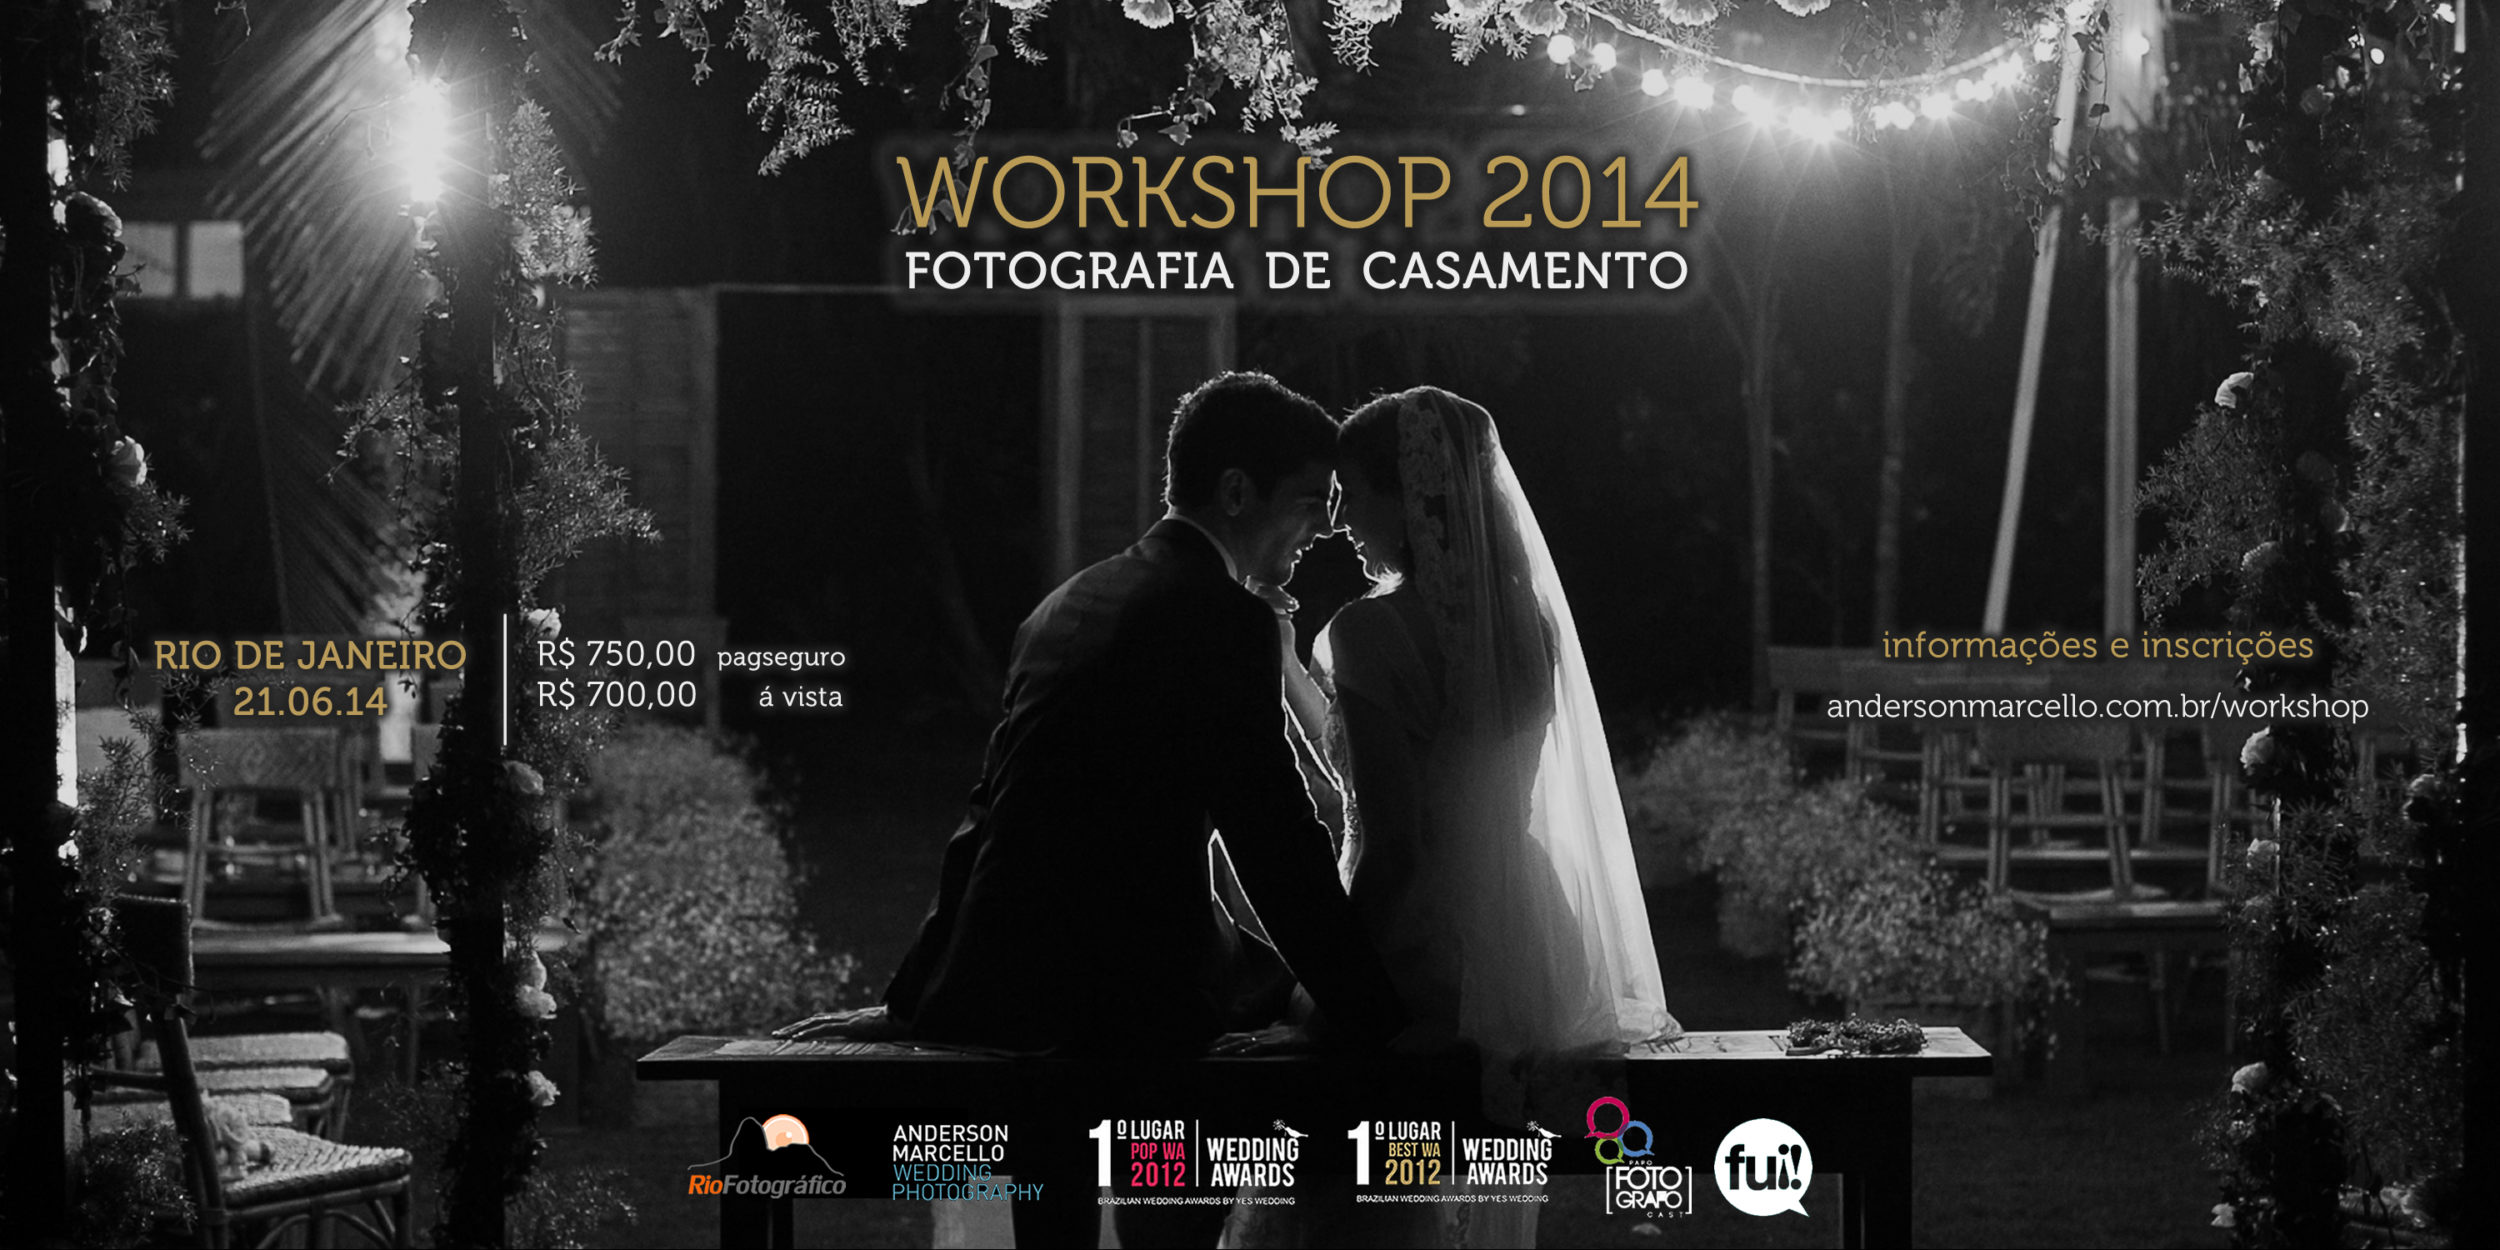 FOTOGRAFIA DE CASAMENTOS | Workshop 2014